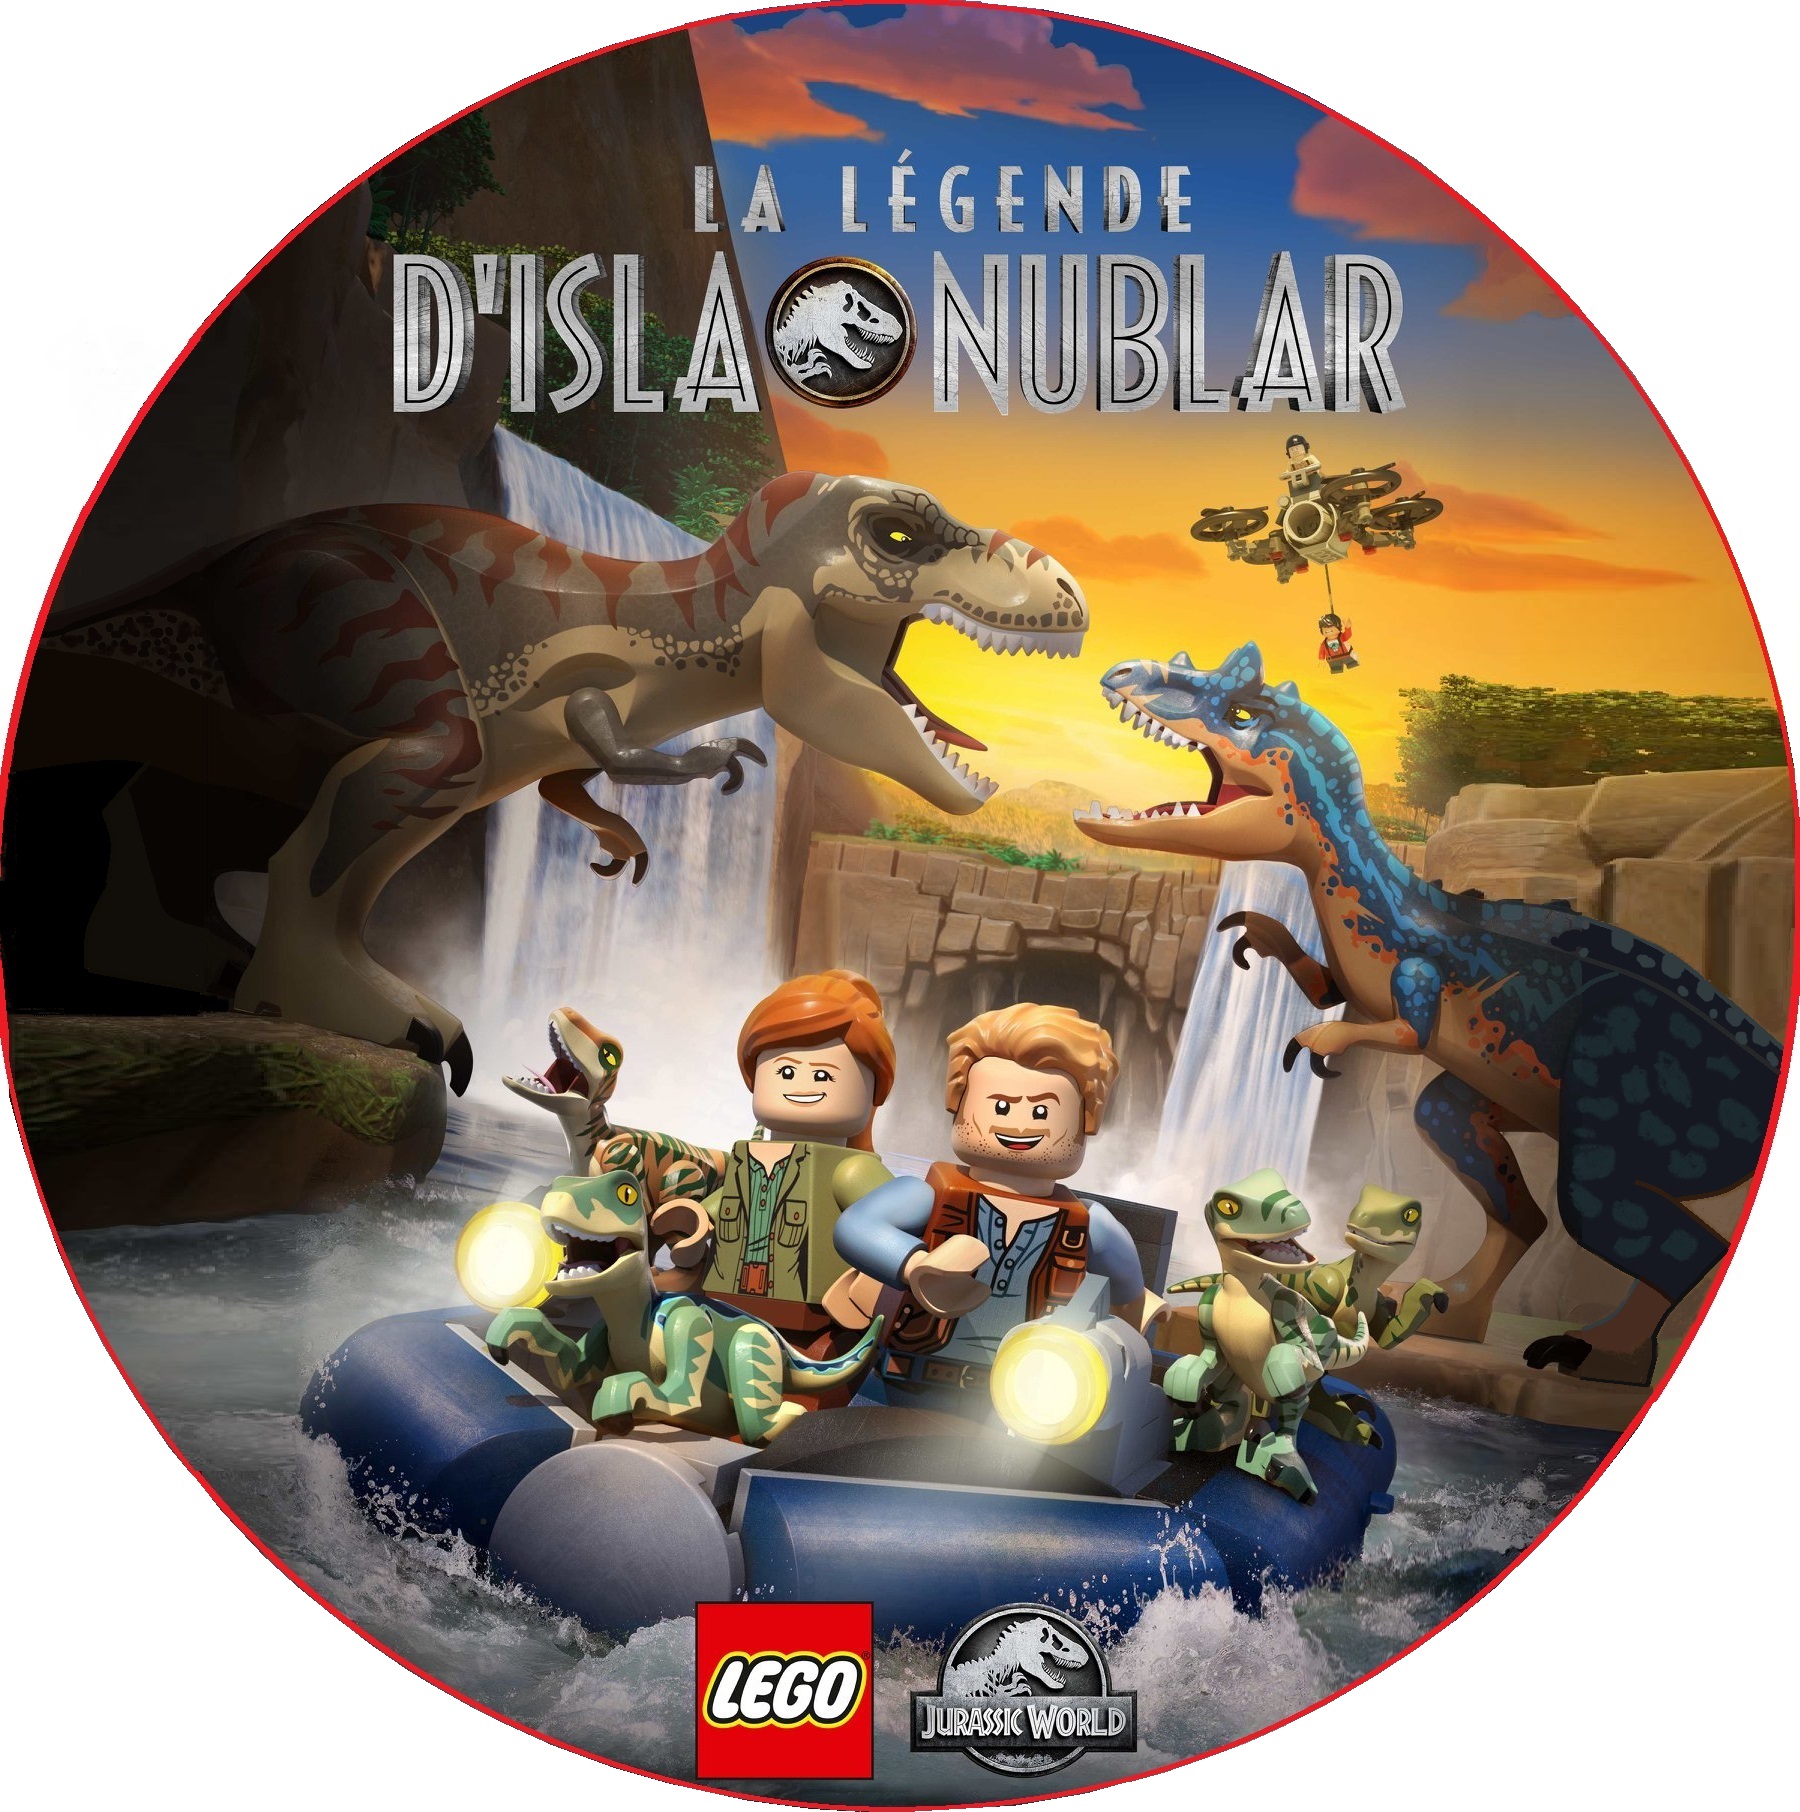 Lego Jurassic World La Legende d